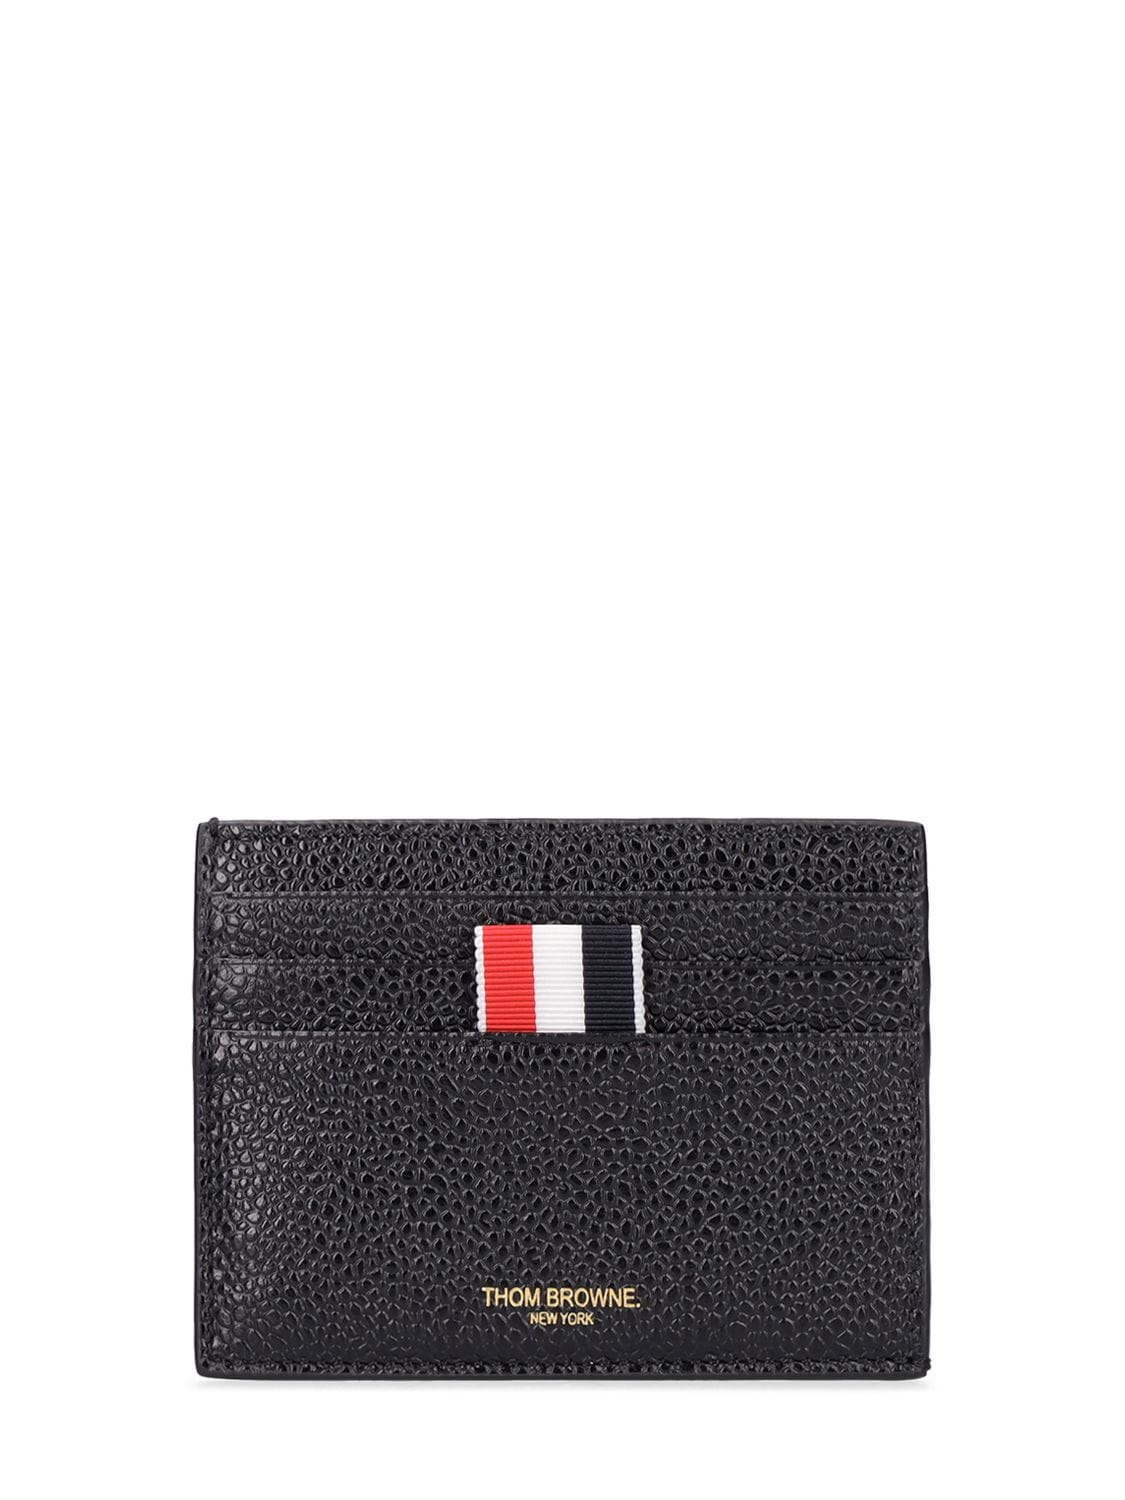 Thom Browne Pebble Leather Credit Card Holder In Black